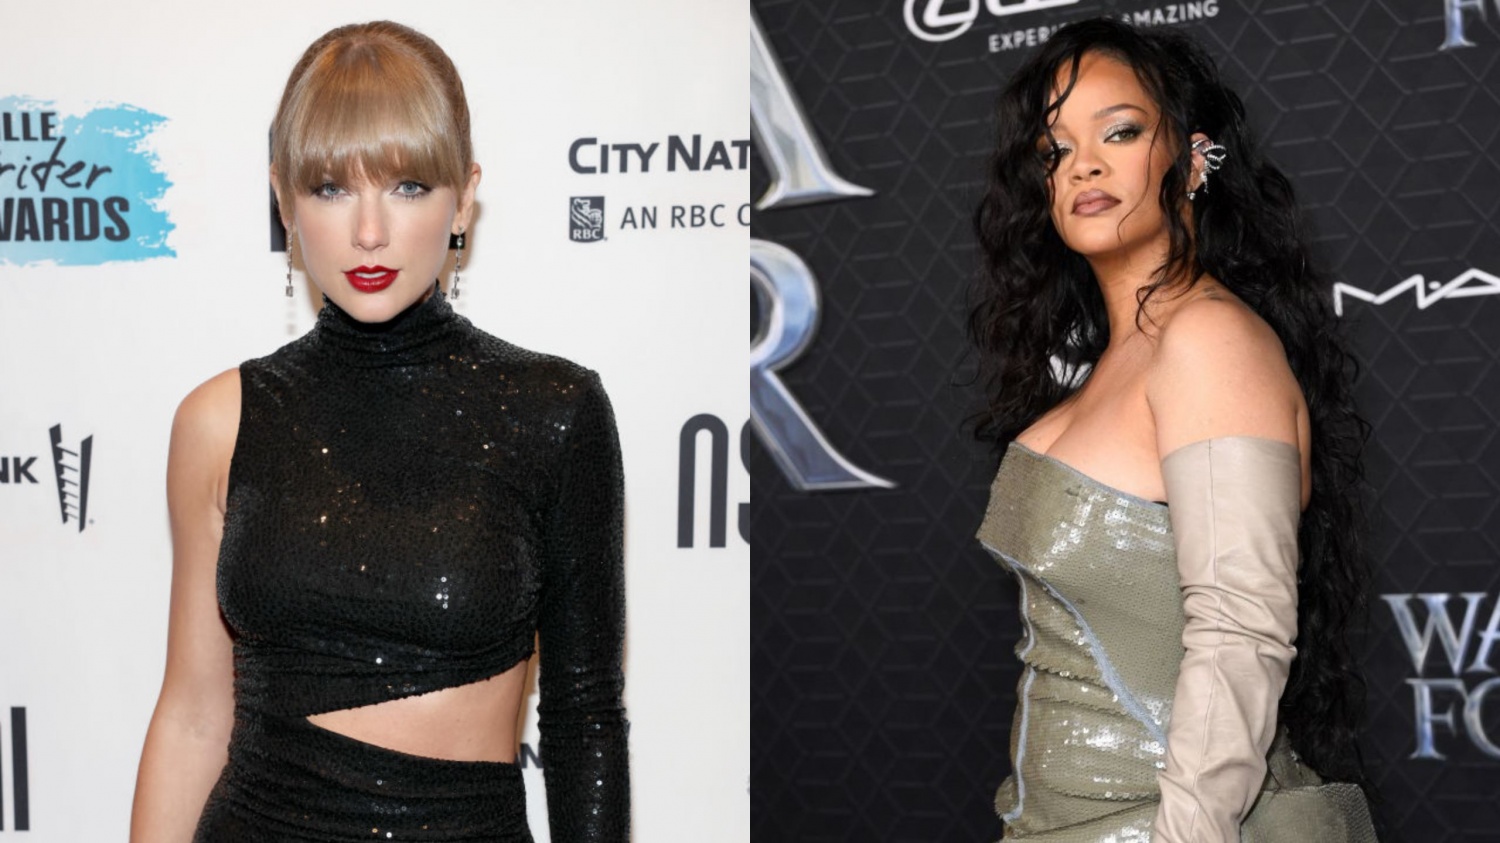 Taylor Swift Vs Rihanna Net Worth 2022 Who S Wealthier Between The Top Two Billboard Hot 100